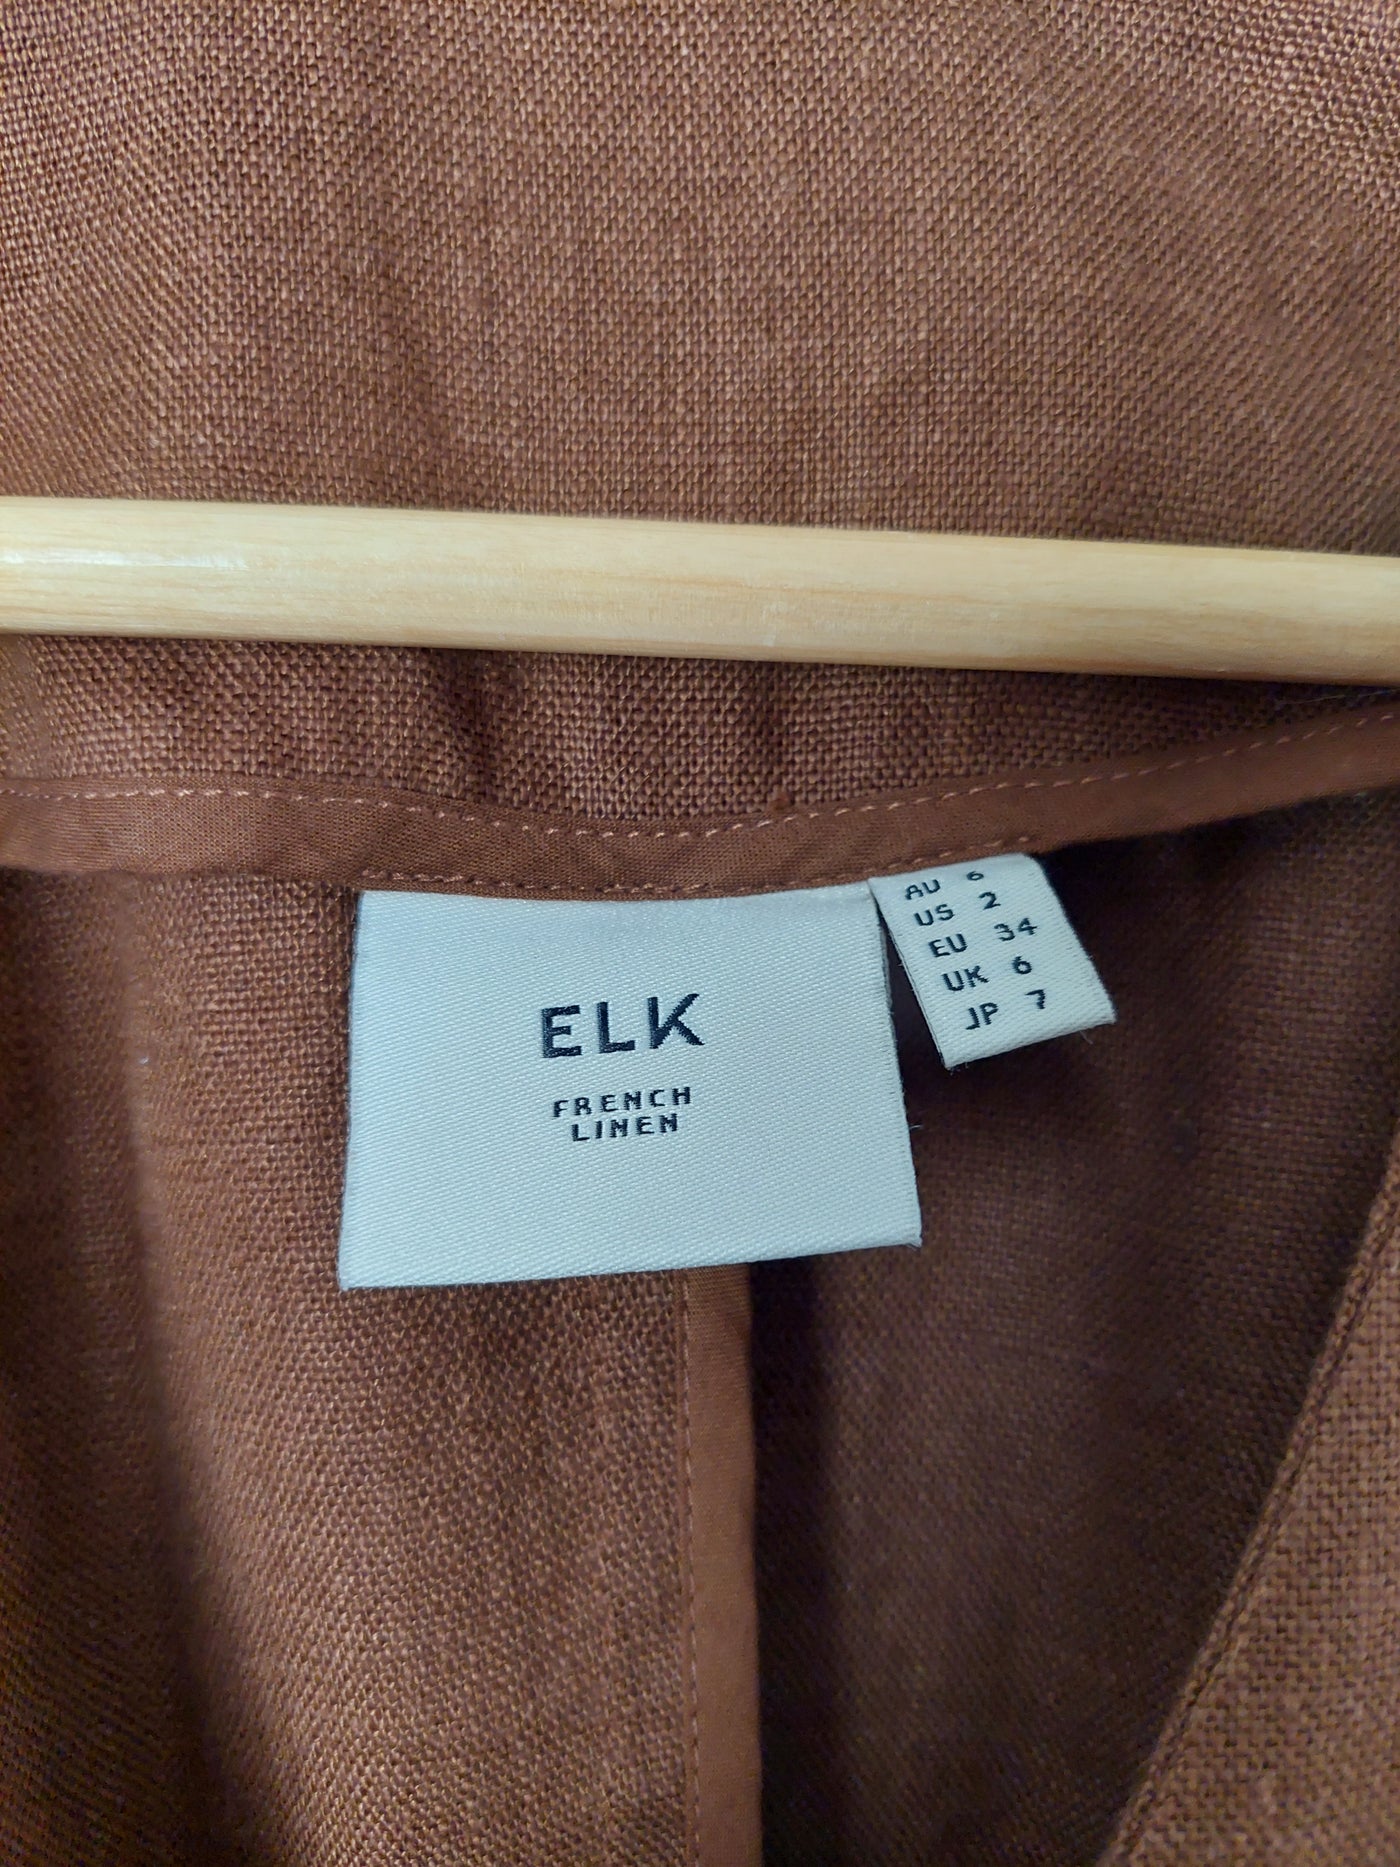 ELK 'Fiene' 100% French Linen Jacket - Bronze Brown, Size 6. RRP $249